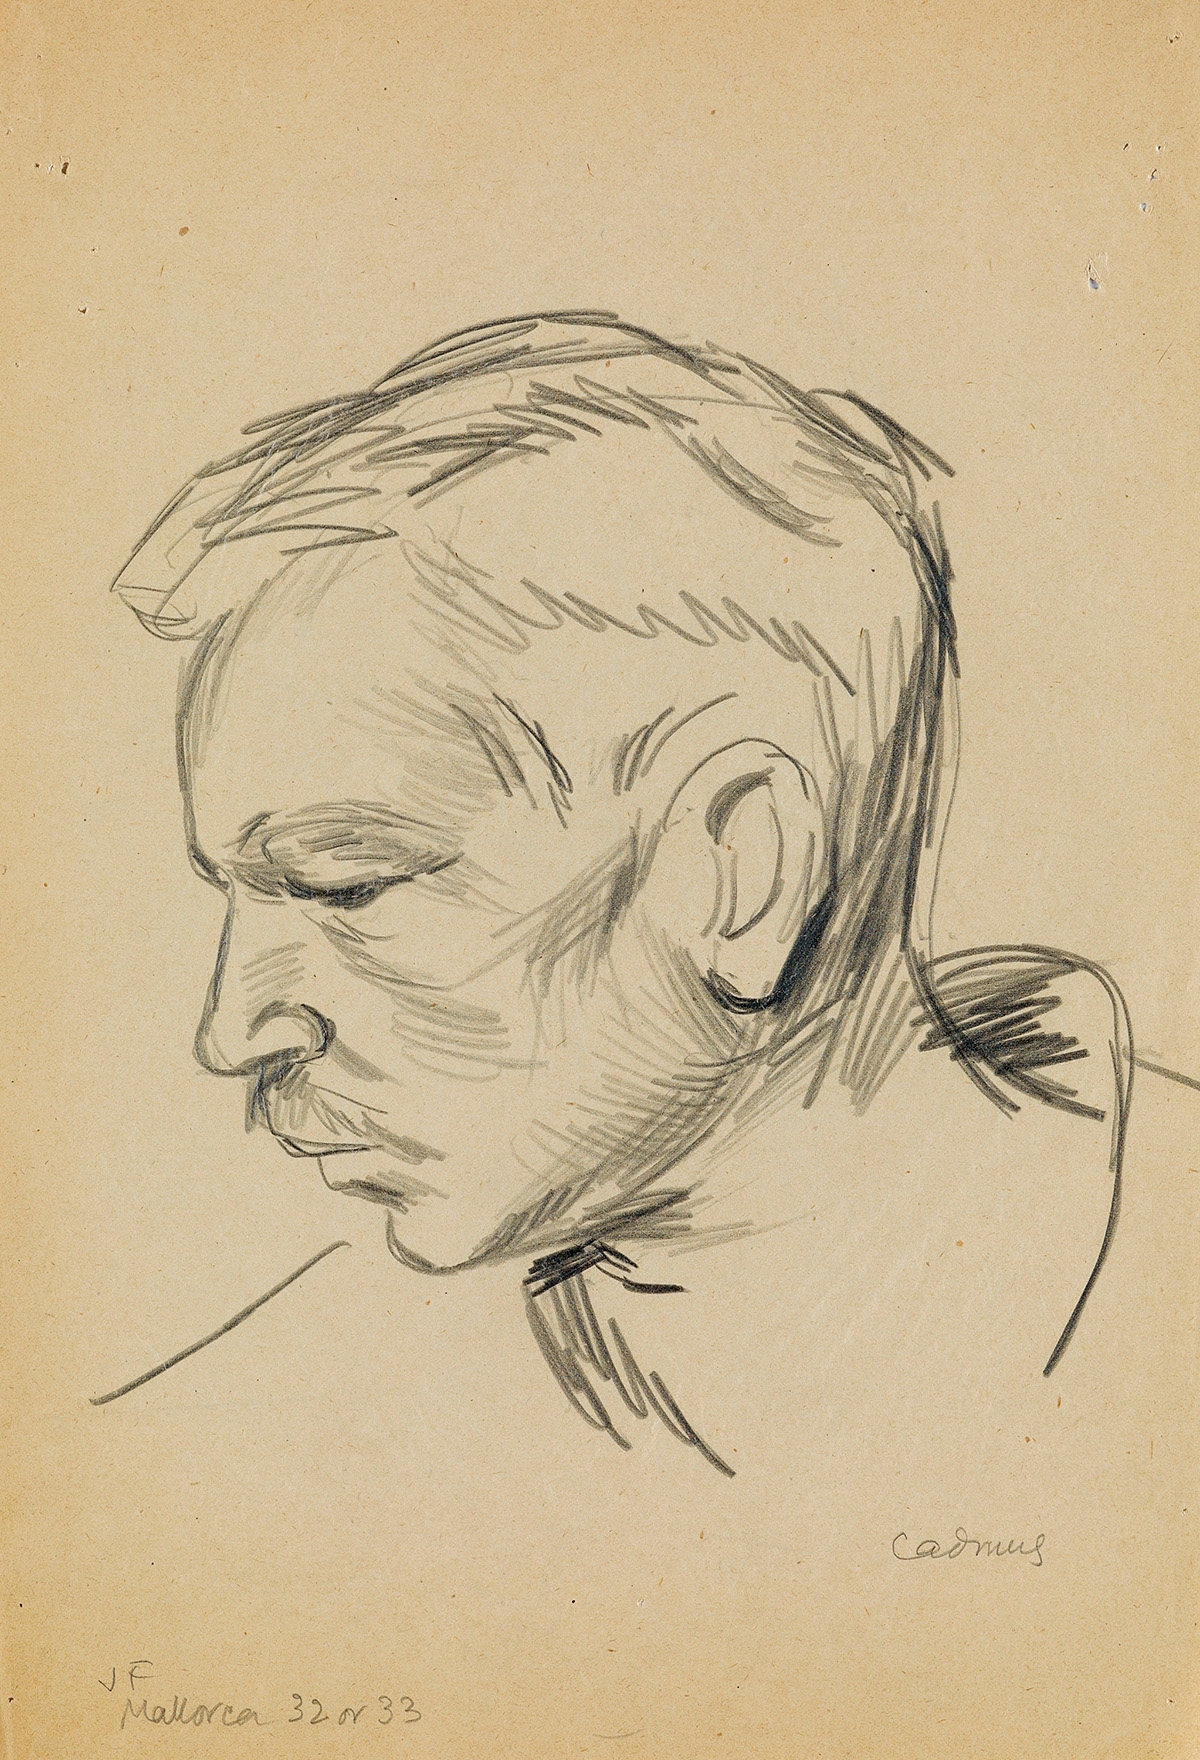 Profile Portrait of Jared French, Mallorca by Paul Cadmus, circa 1932-1933